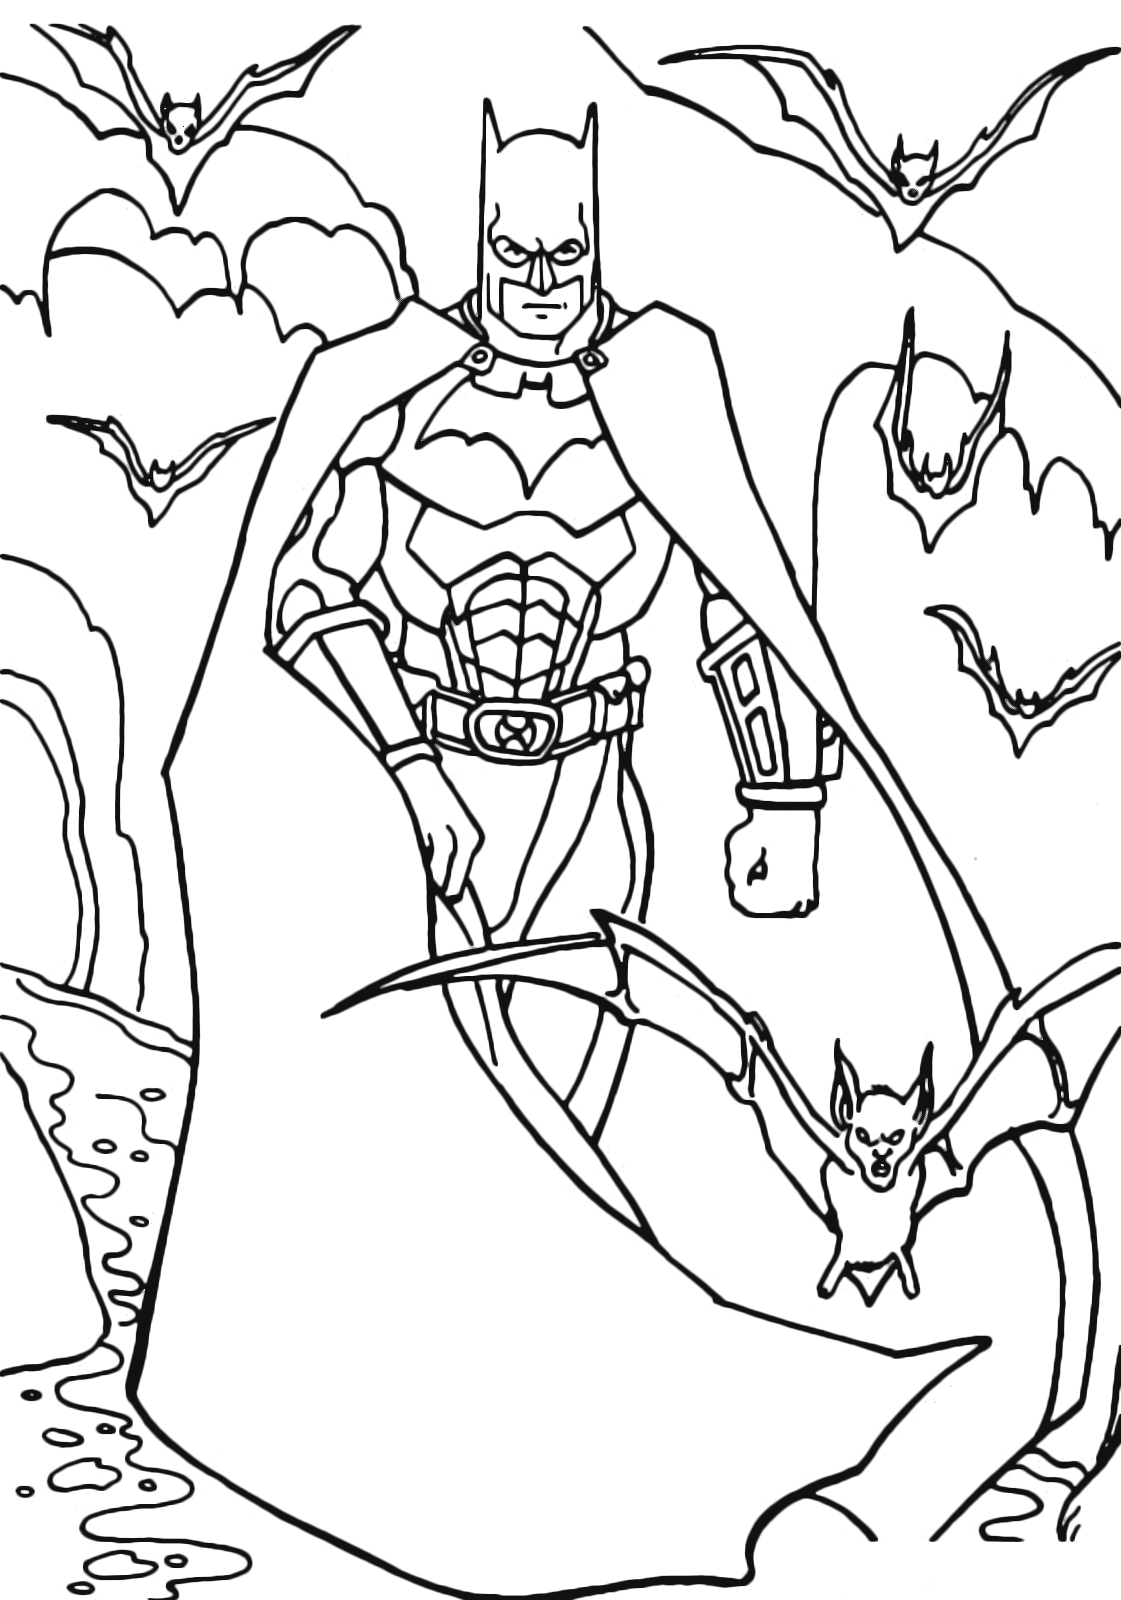 Batman - Batman walks among the bats